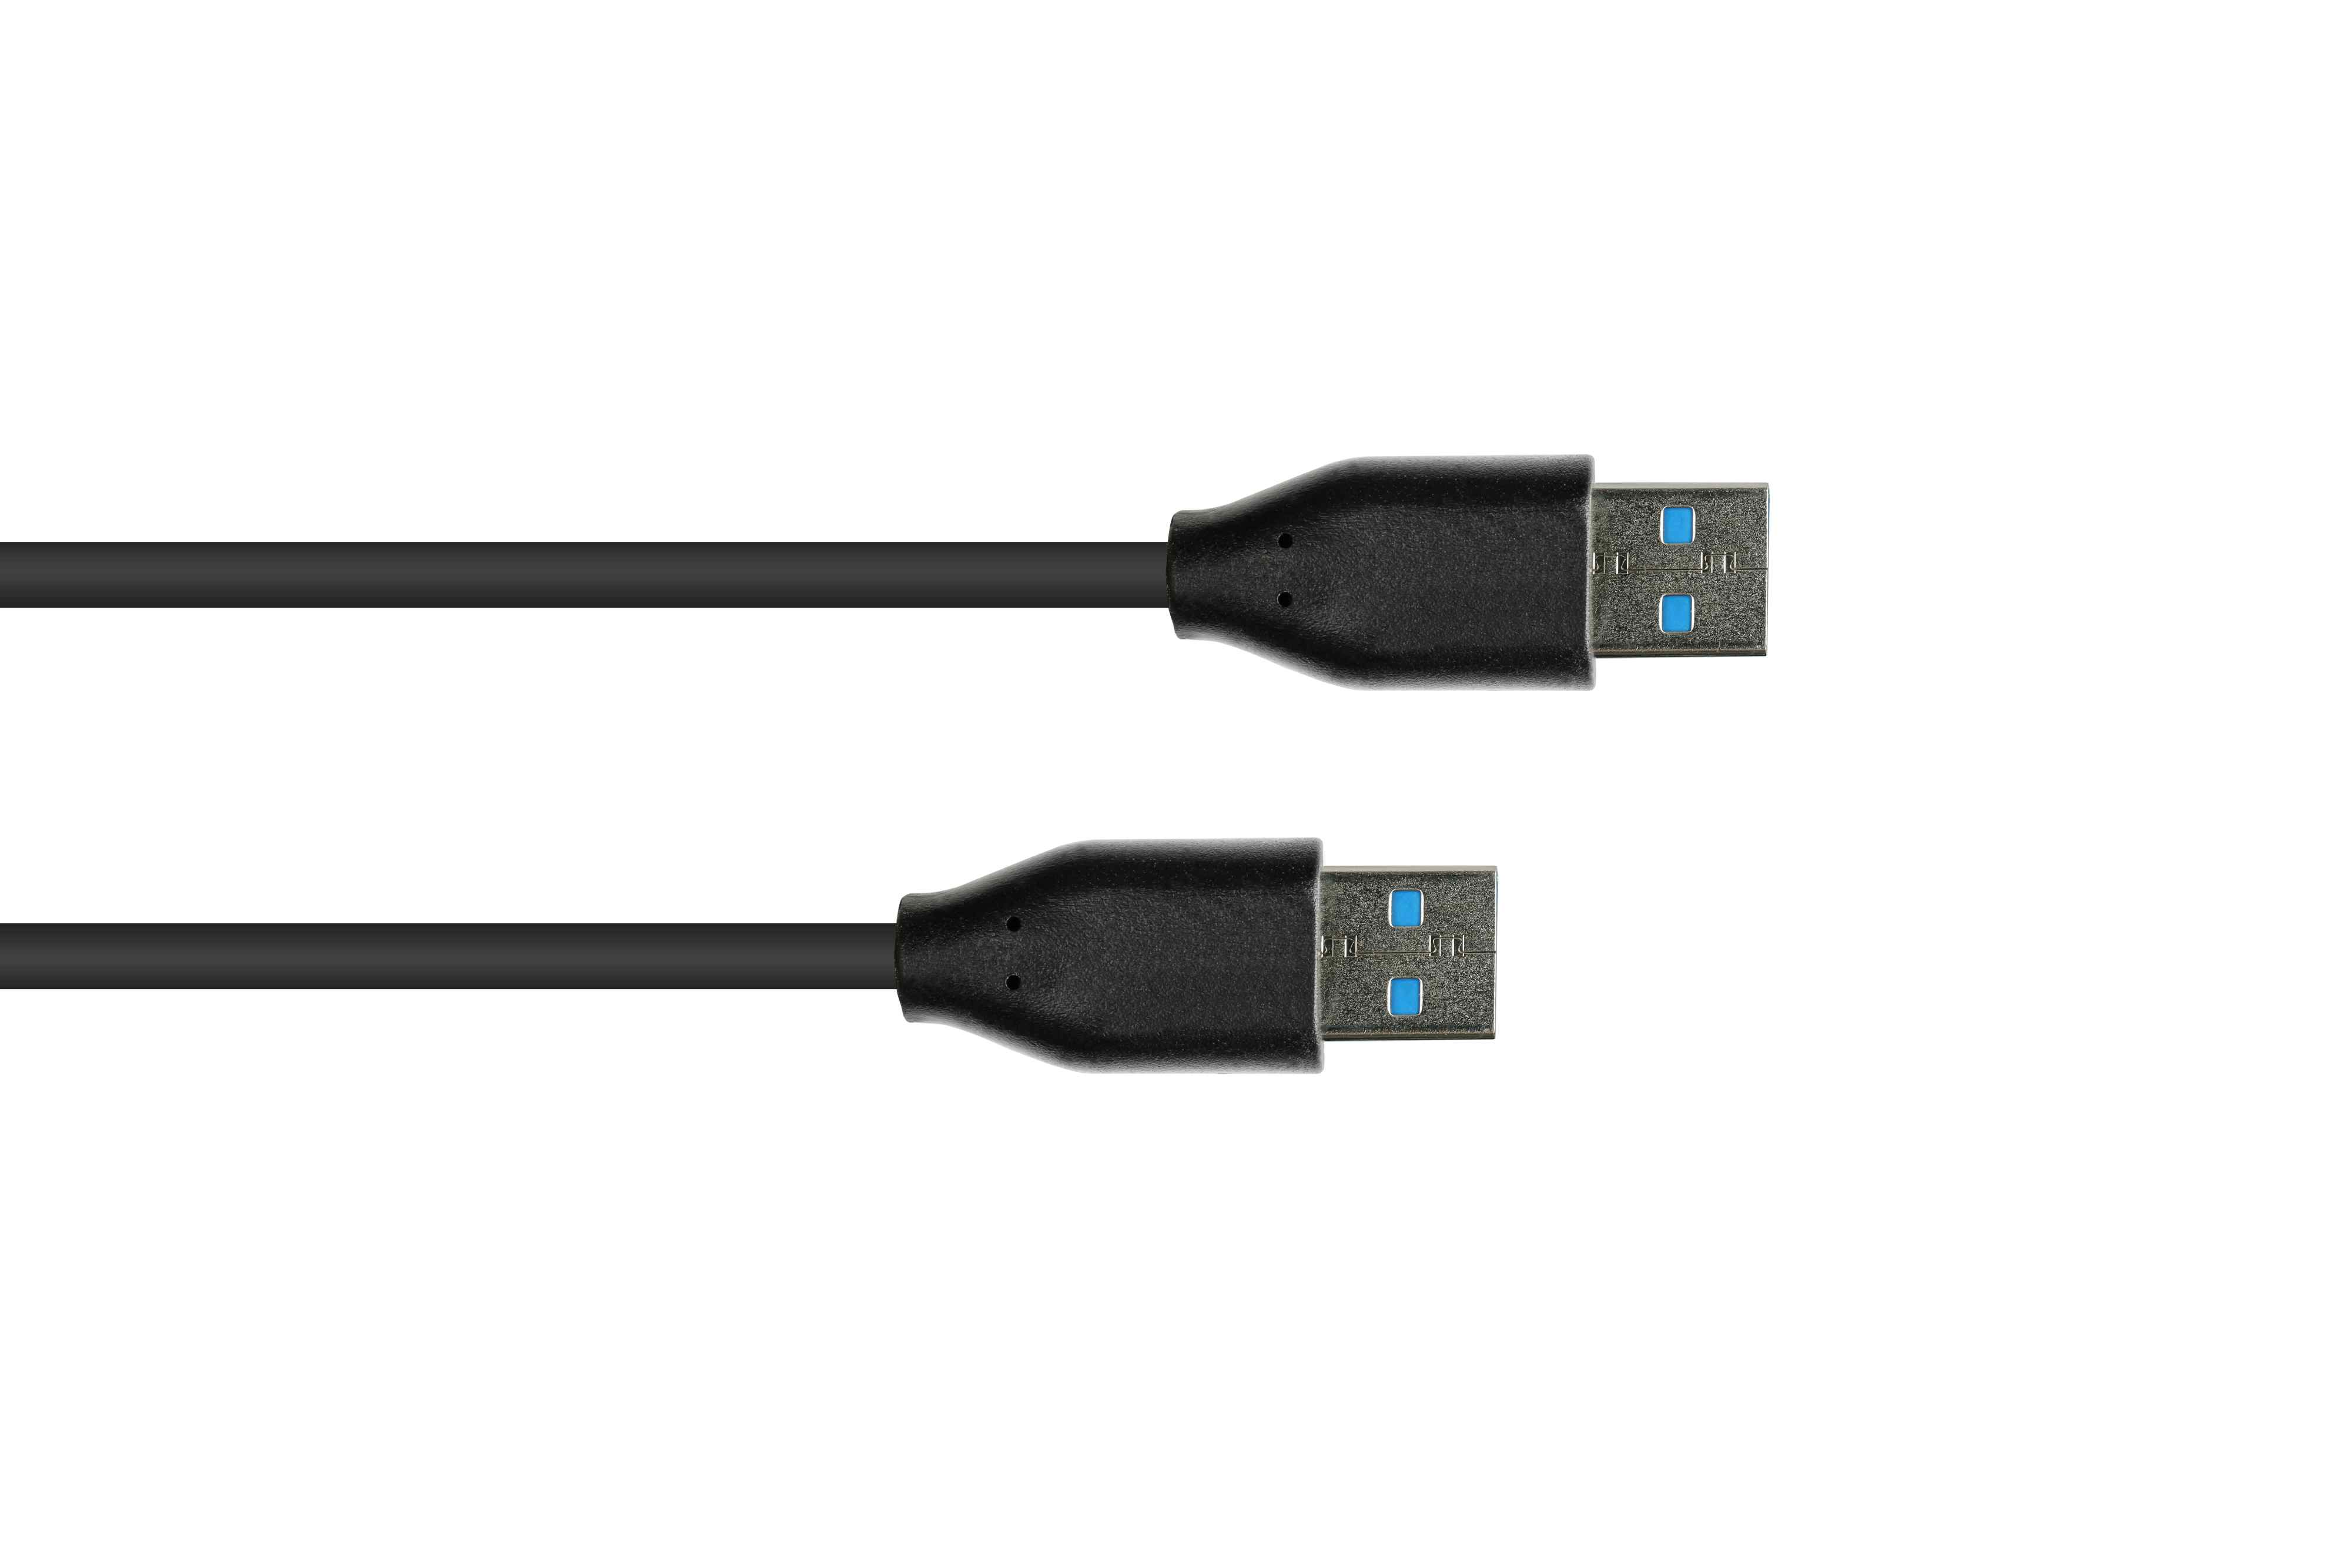 Kabel USB-A auf GOOD USB-A USB-Kabel CONNECTIONS